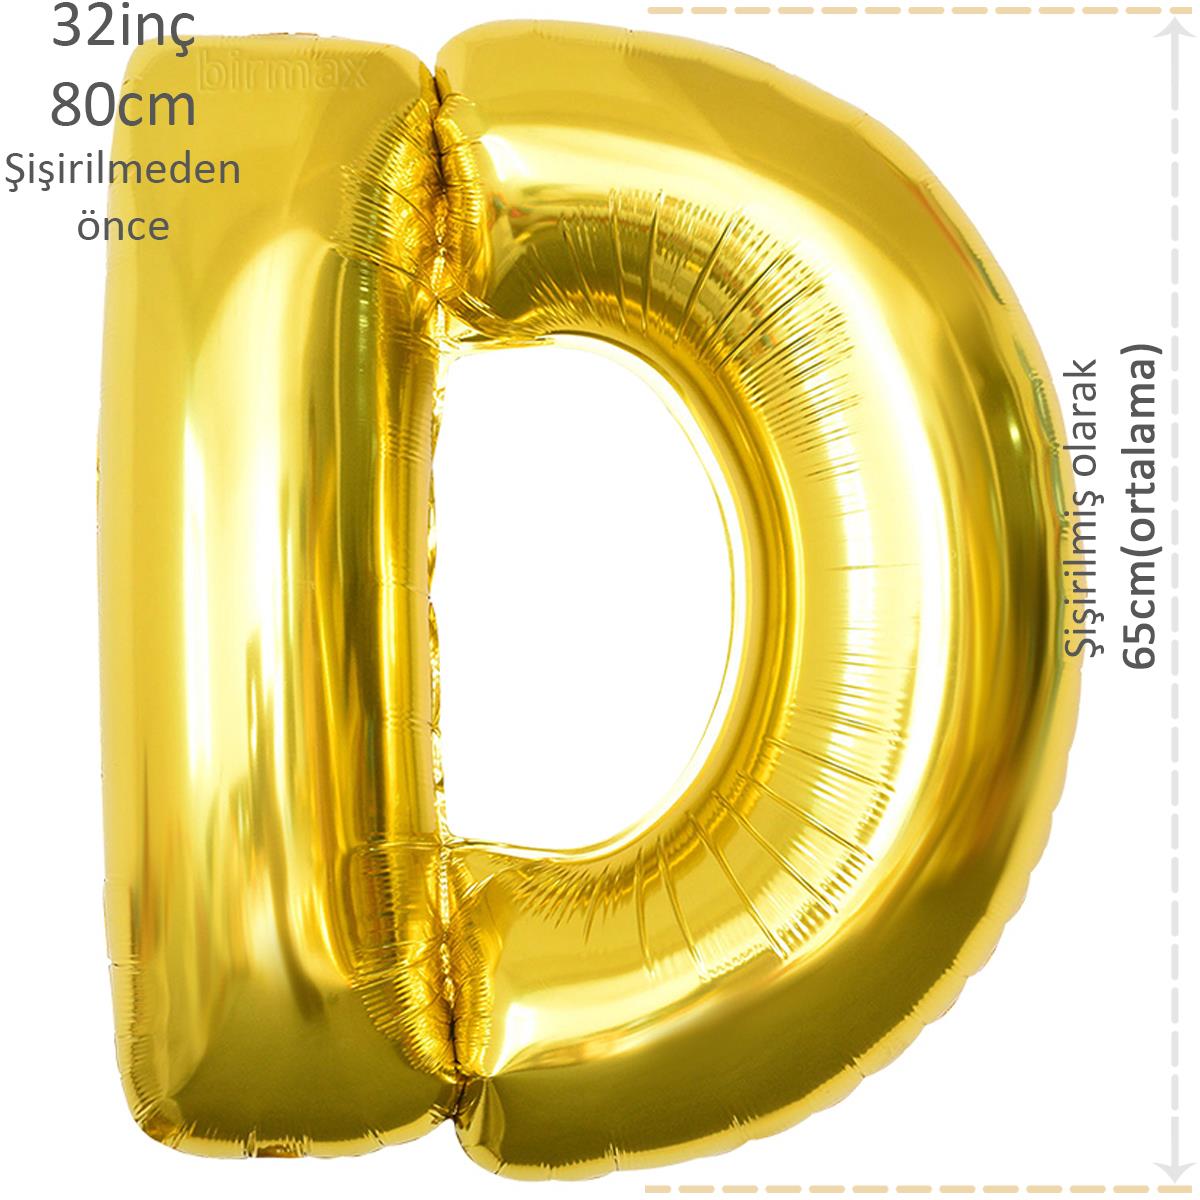 Harf Folyo Balon Altın Gold D Harfi 32inç 80cm